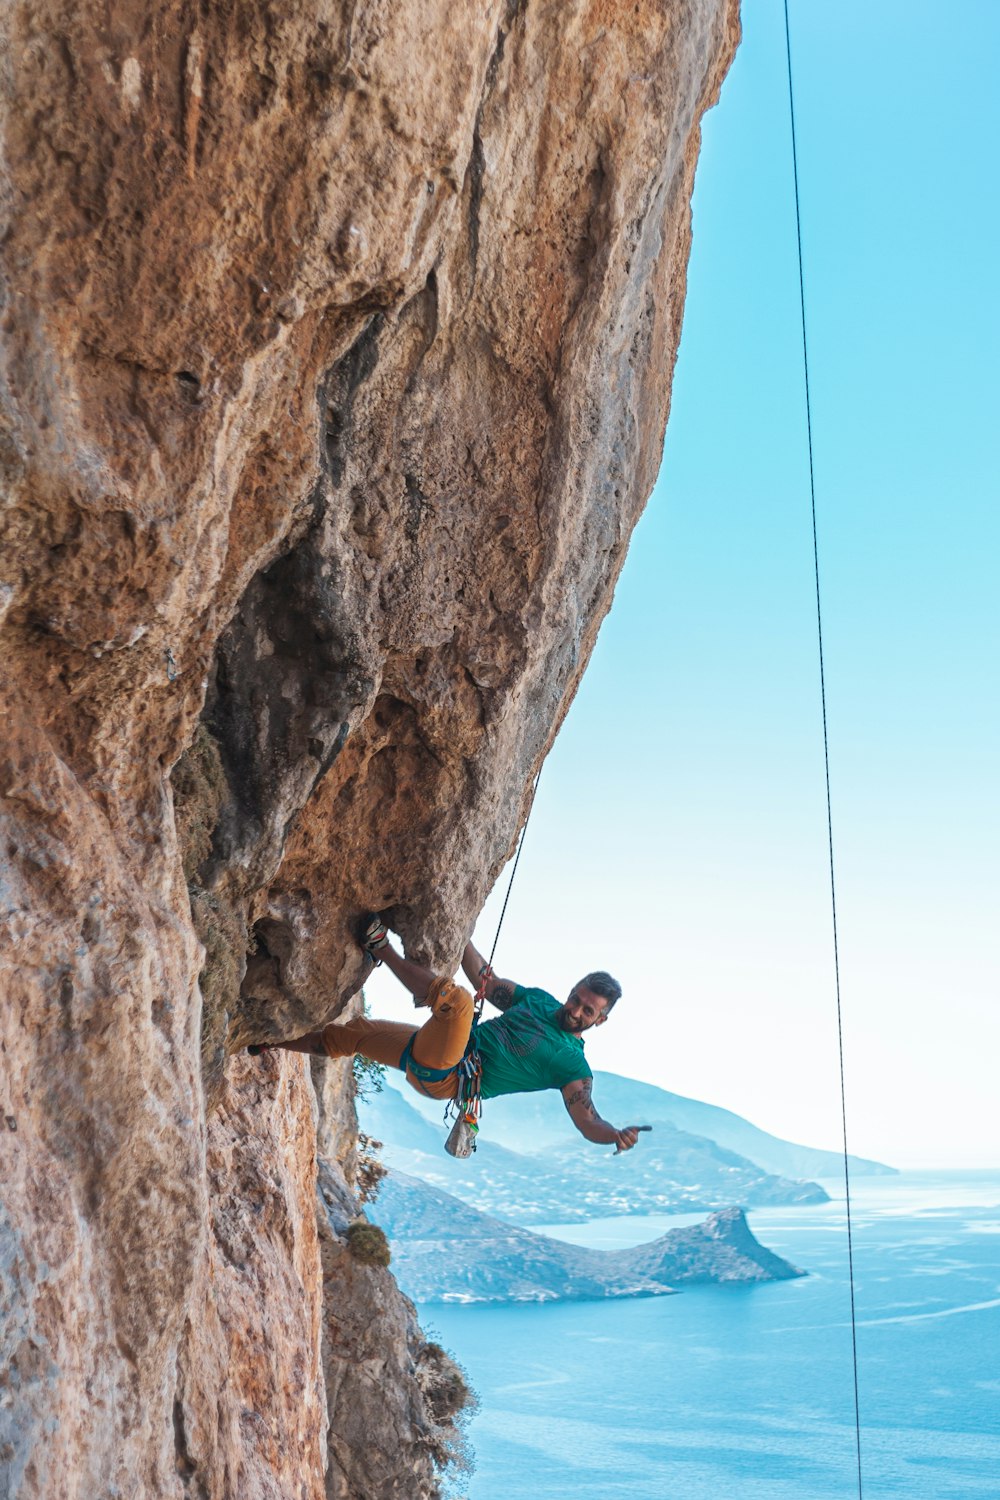 man in teal shirt climbing rock formation